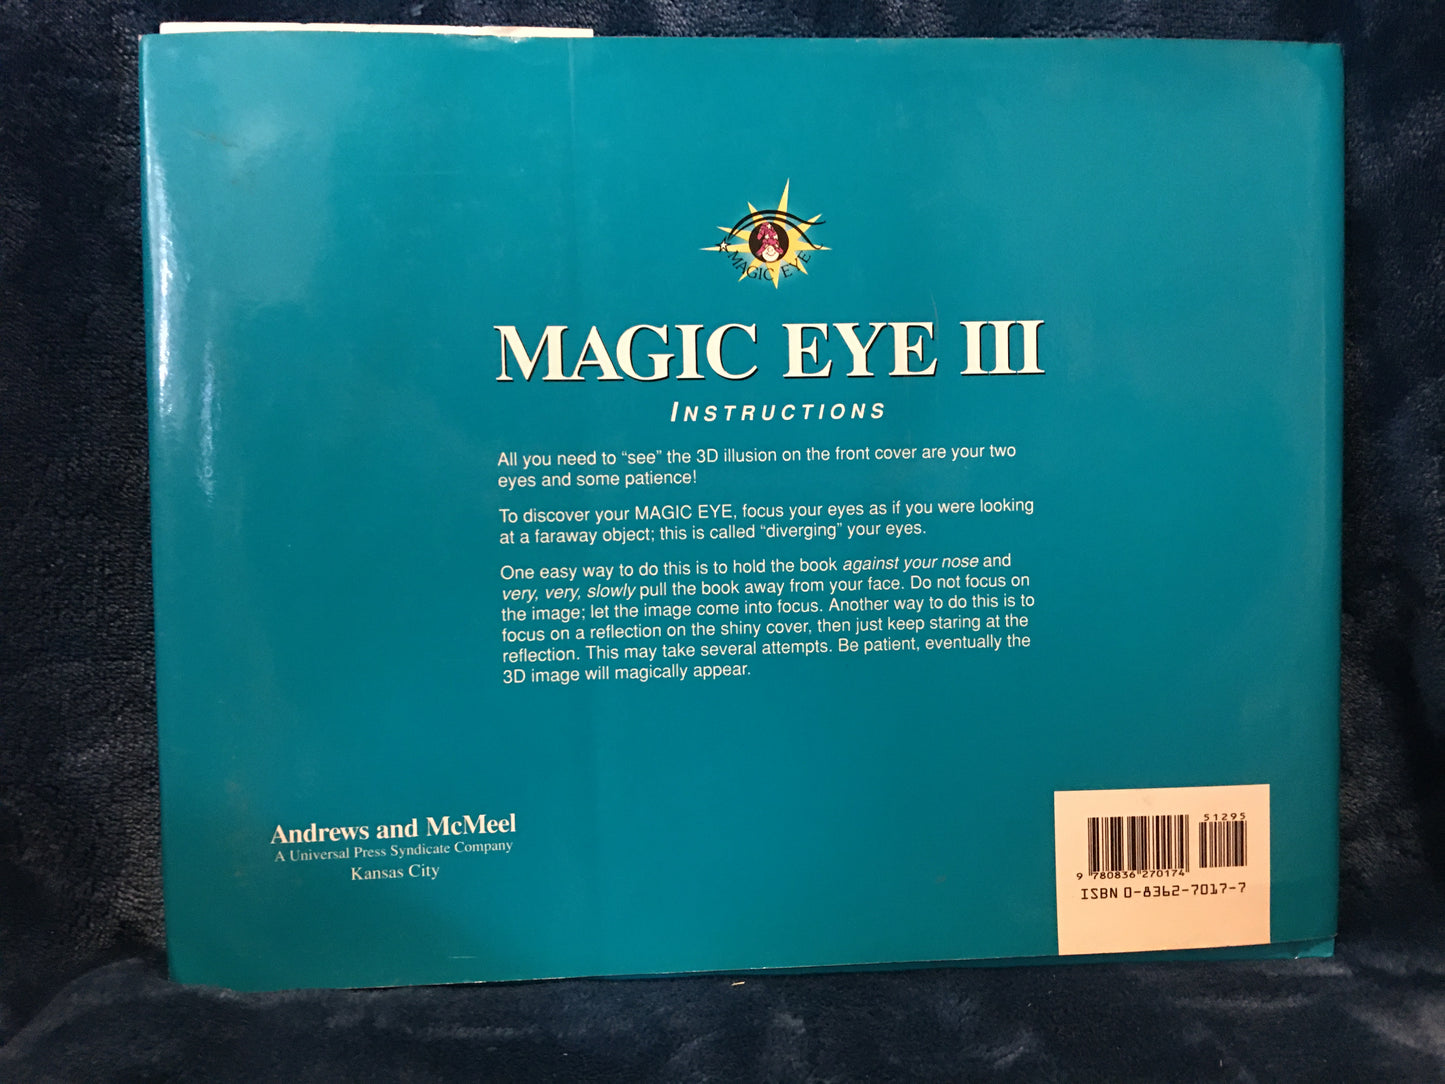 Magic Eye Books, 3 Different Volumes - N.E. Thing Enterprises